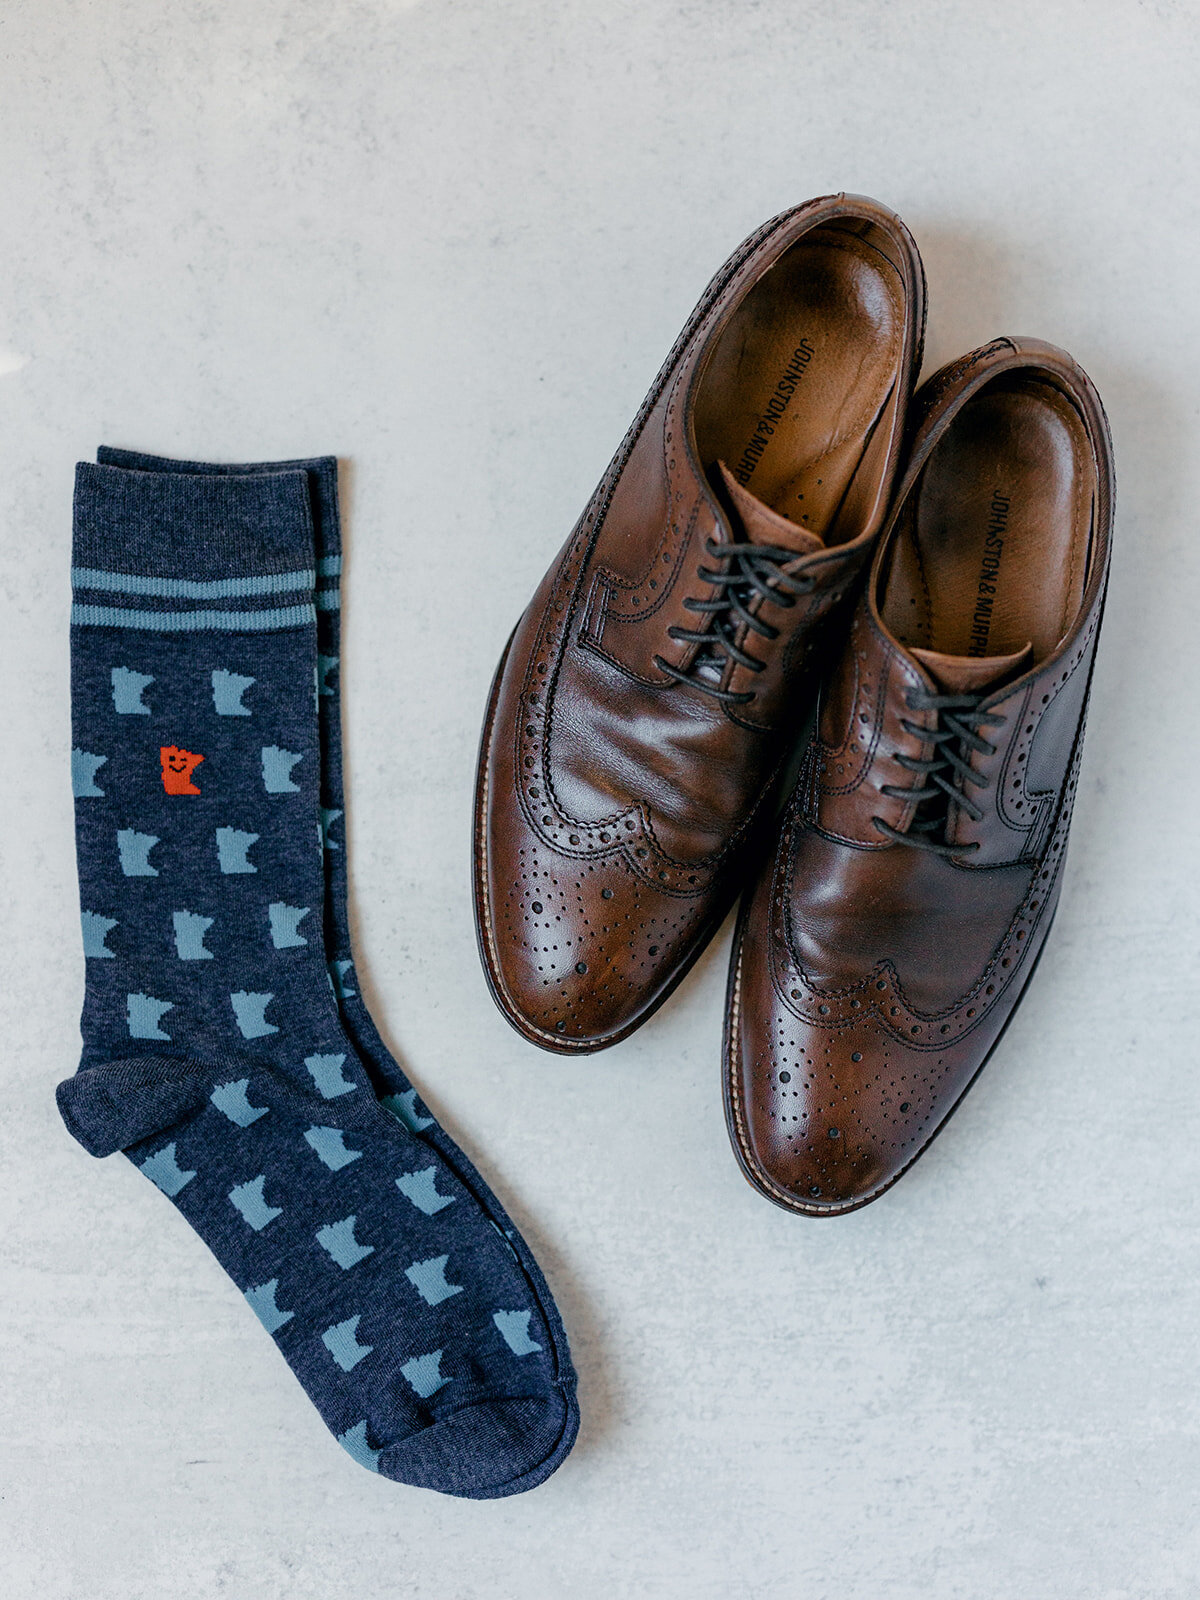 groom-details-brown-shoes-minnesota-socks